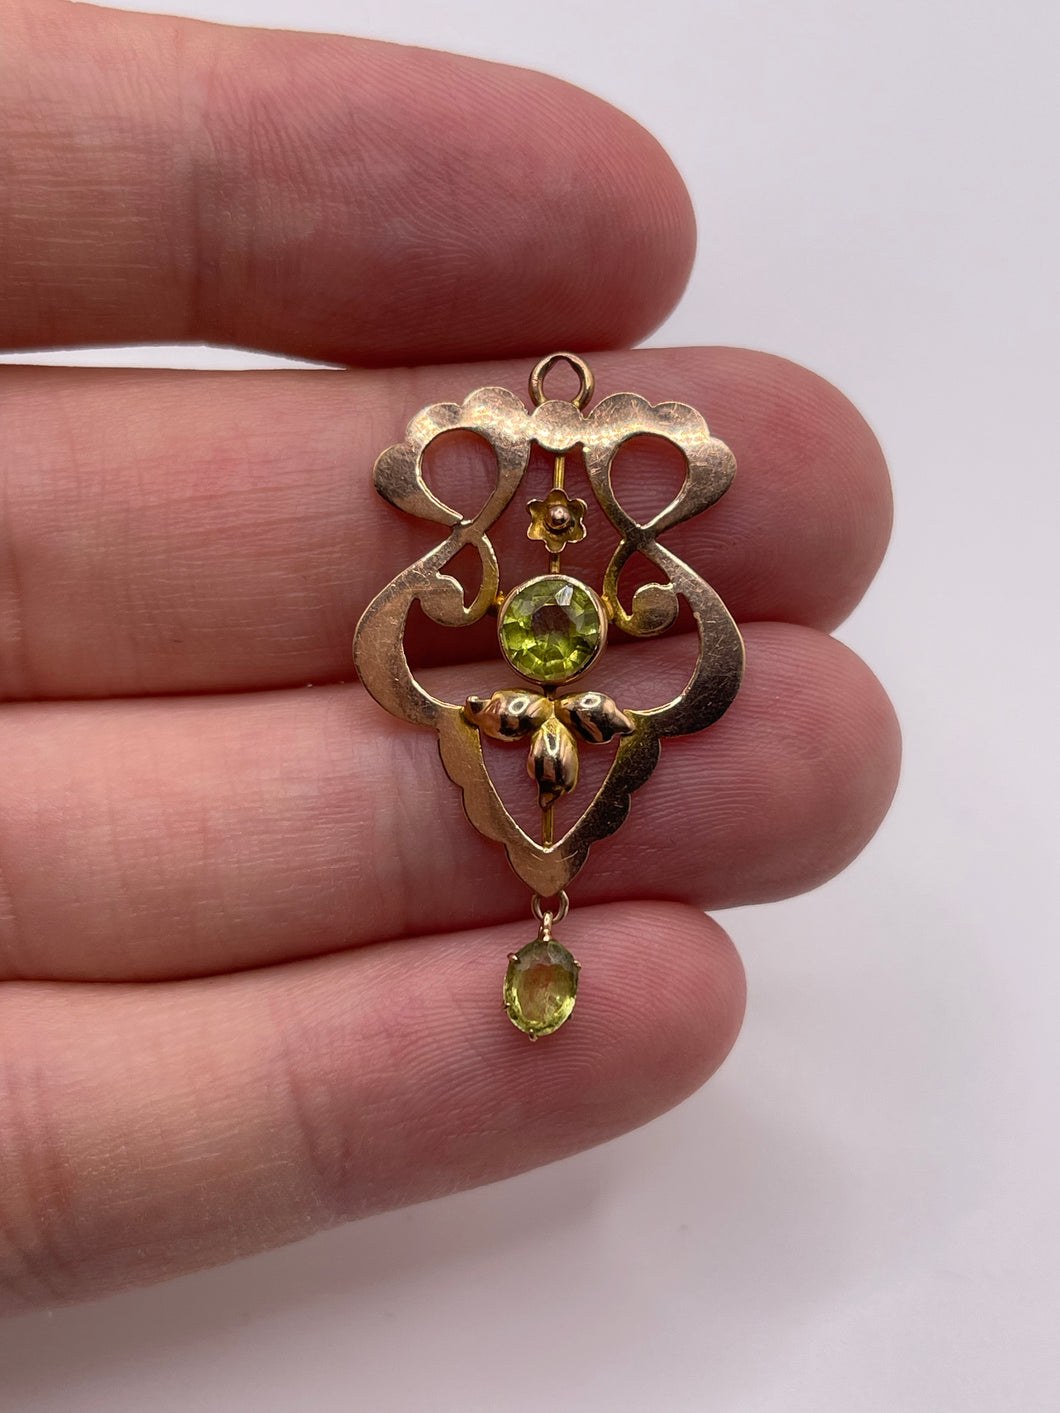 Antique 9ct gold peridot pendant